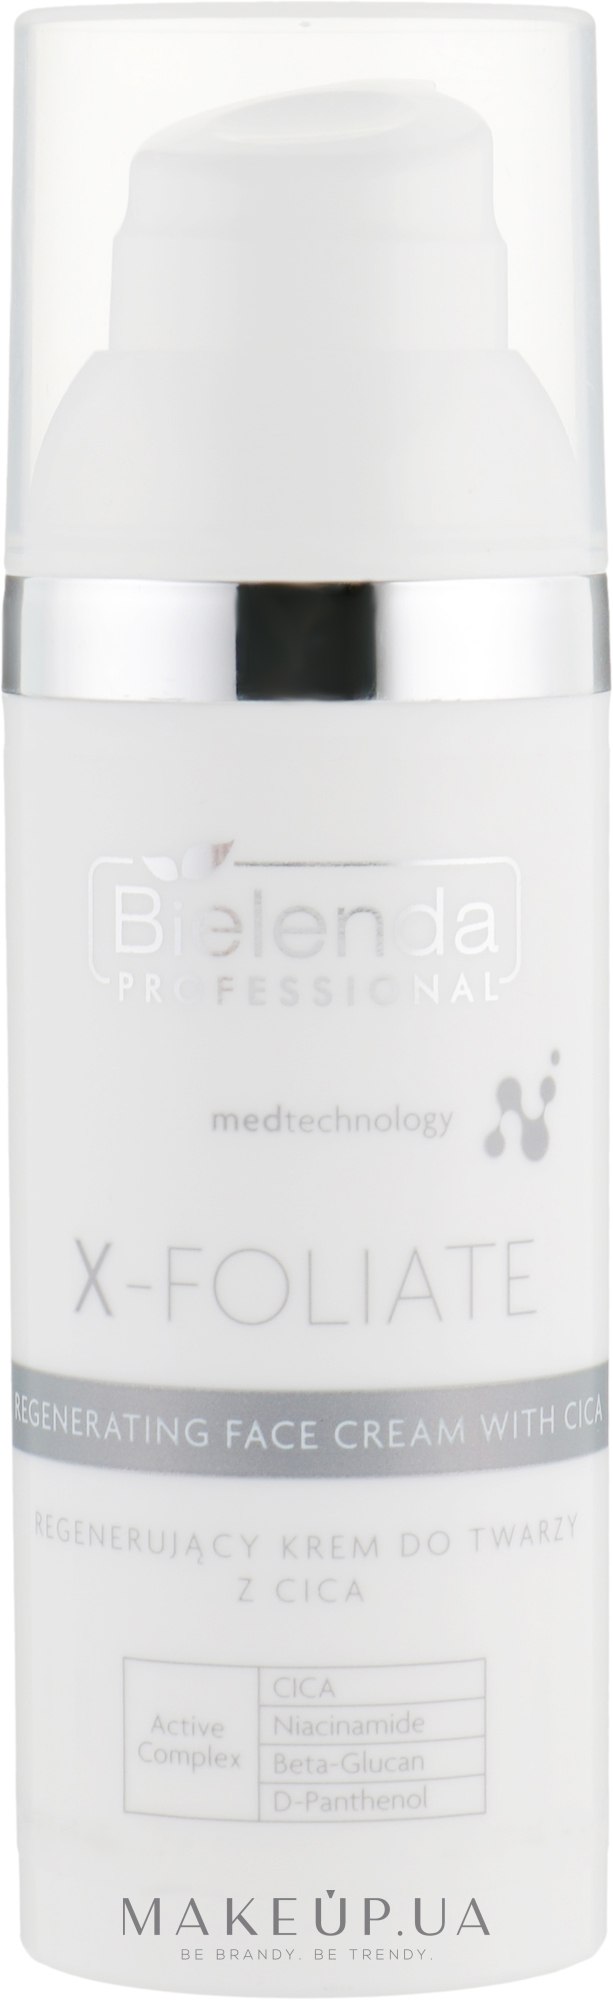 Восстанавливающий крем для лица с CICA - Bielenda Professional X-Foliate Face Cream — фото 50ml